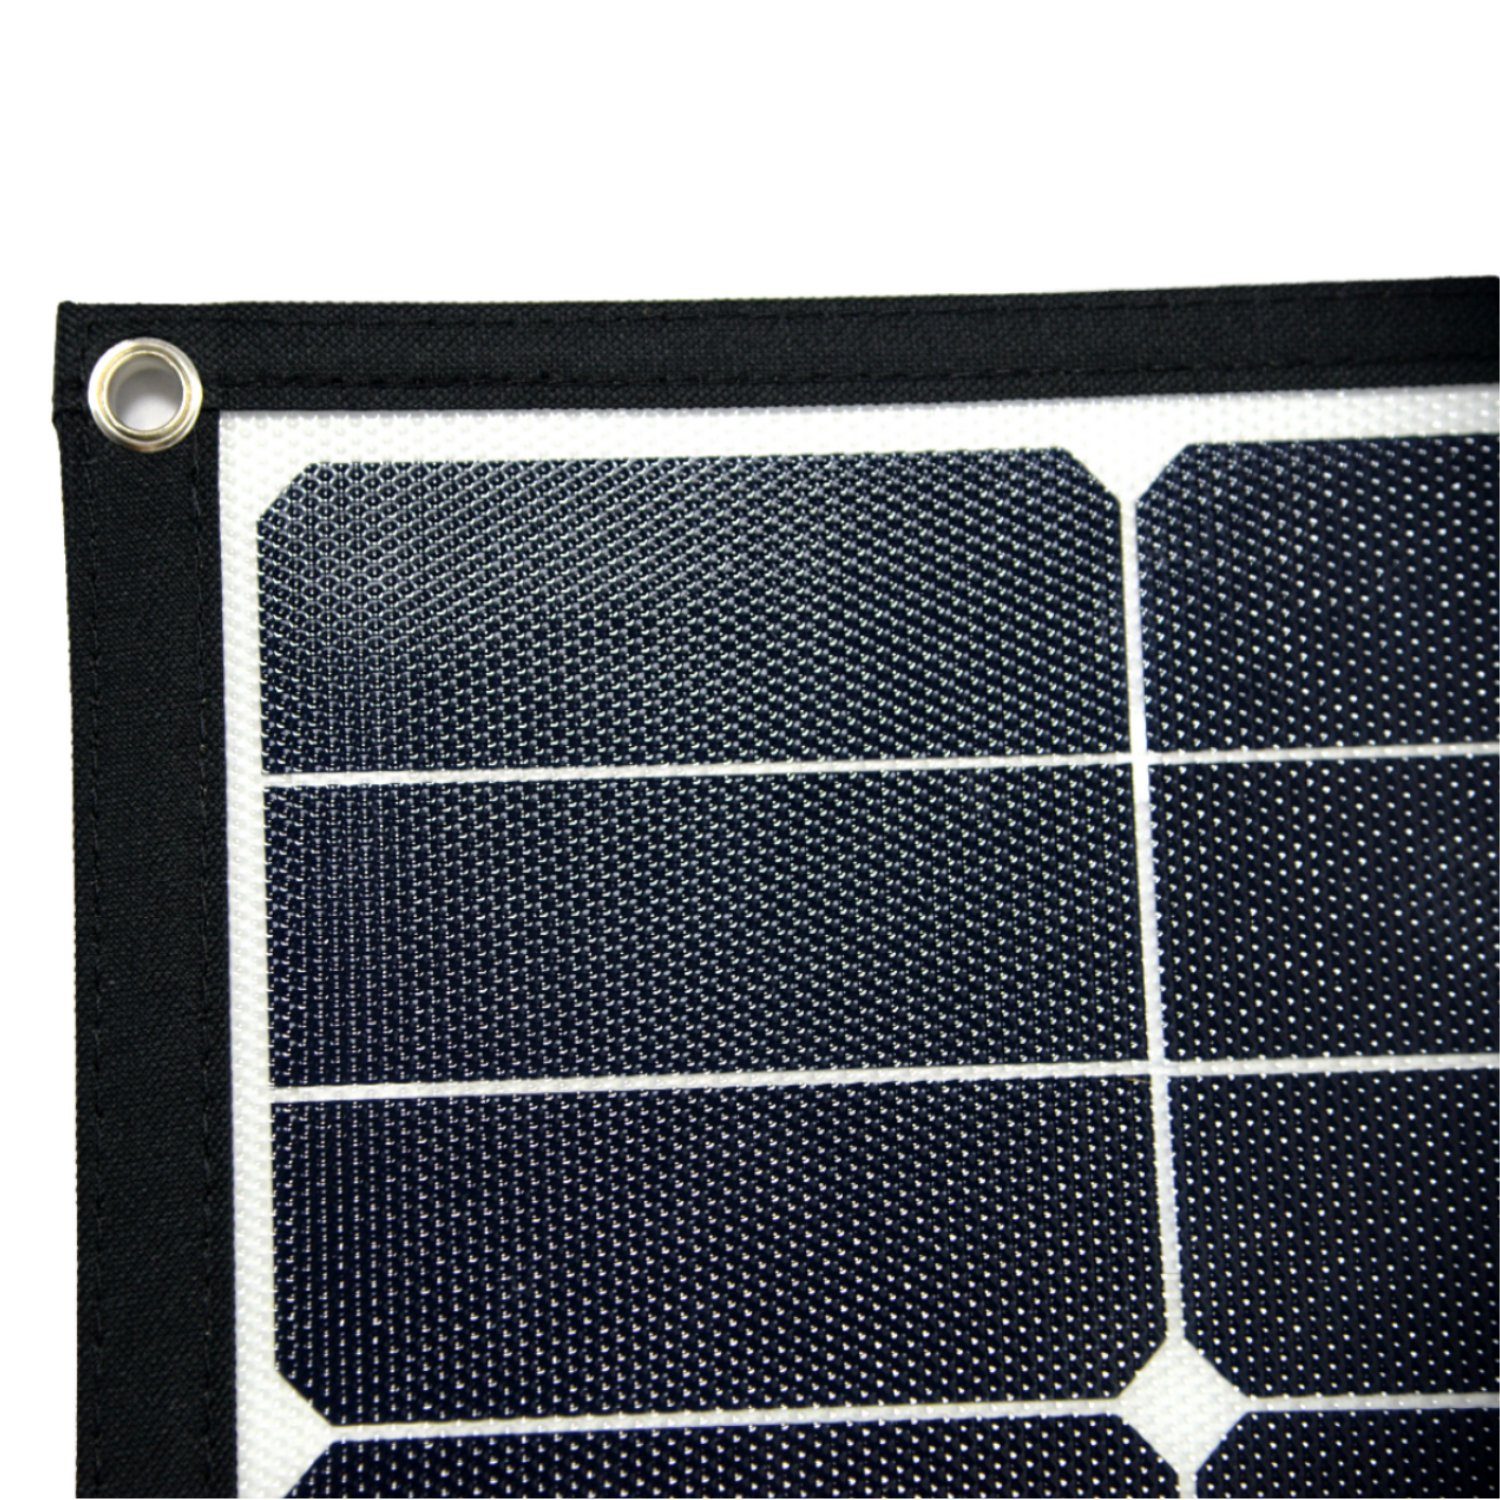 Solarmodul FSP-2 225W MPPT Offgridtec KIT 15A offgridtec Ultra